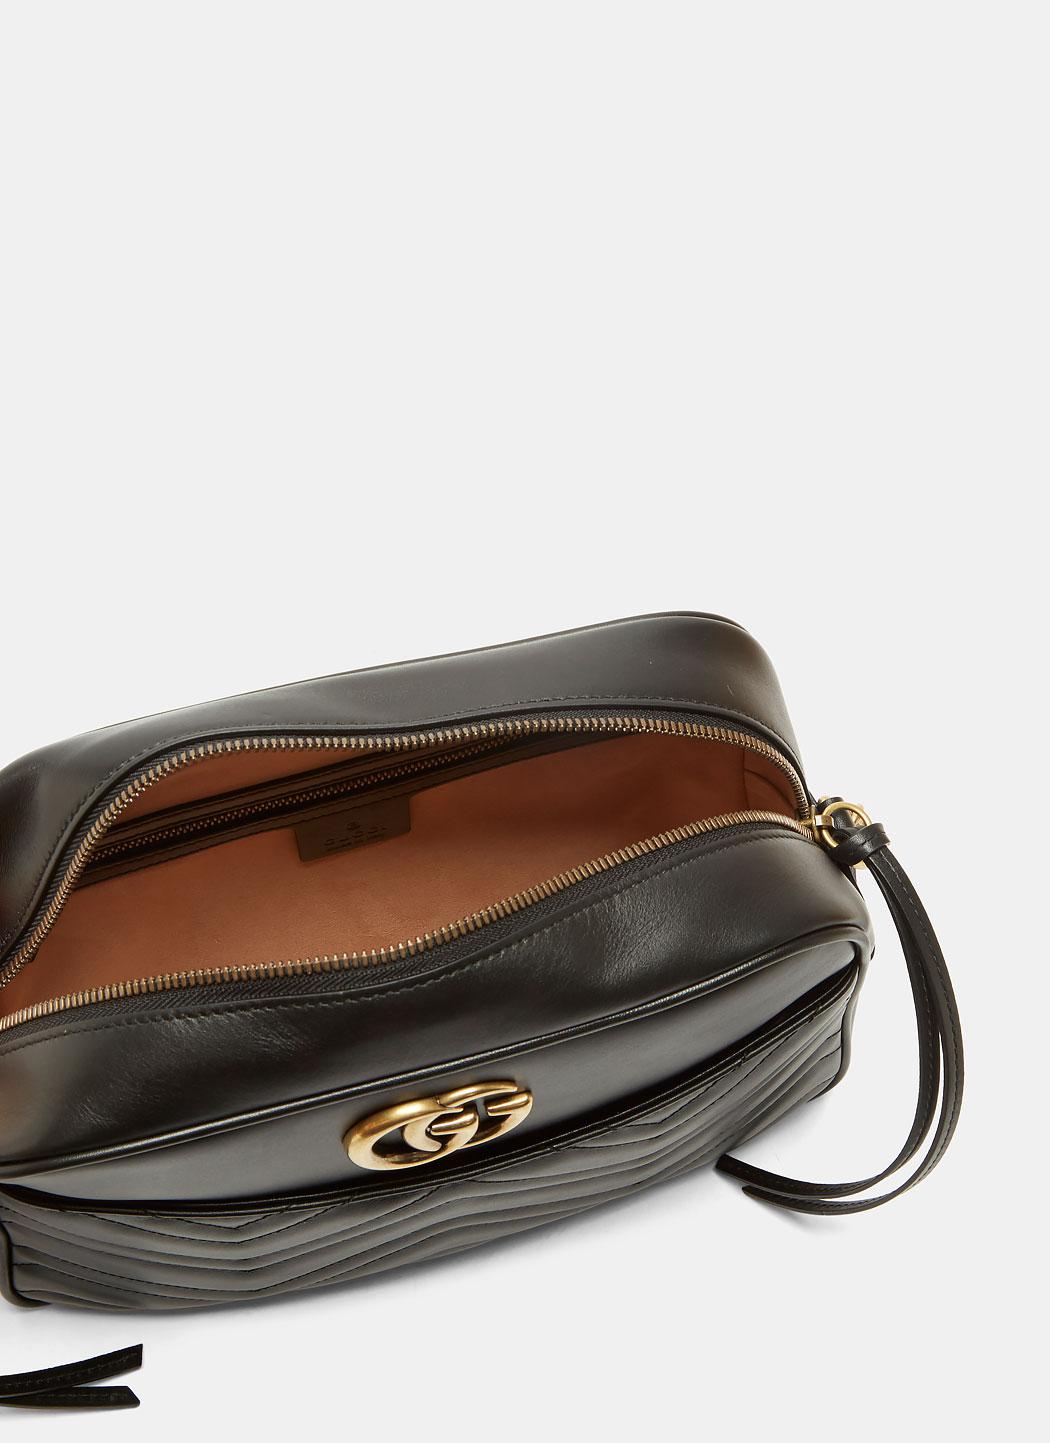 Lyst - Gucci Gg Marmont Matelassé Small Shoulder Bag In Black in Black